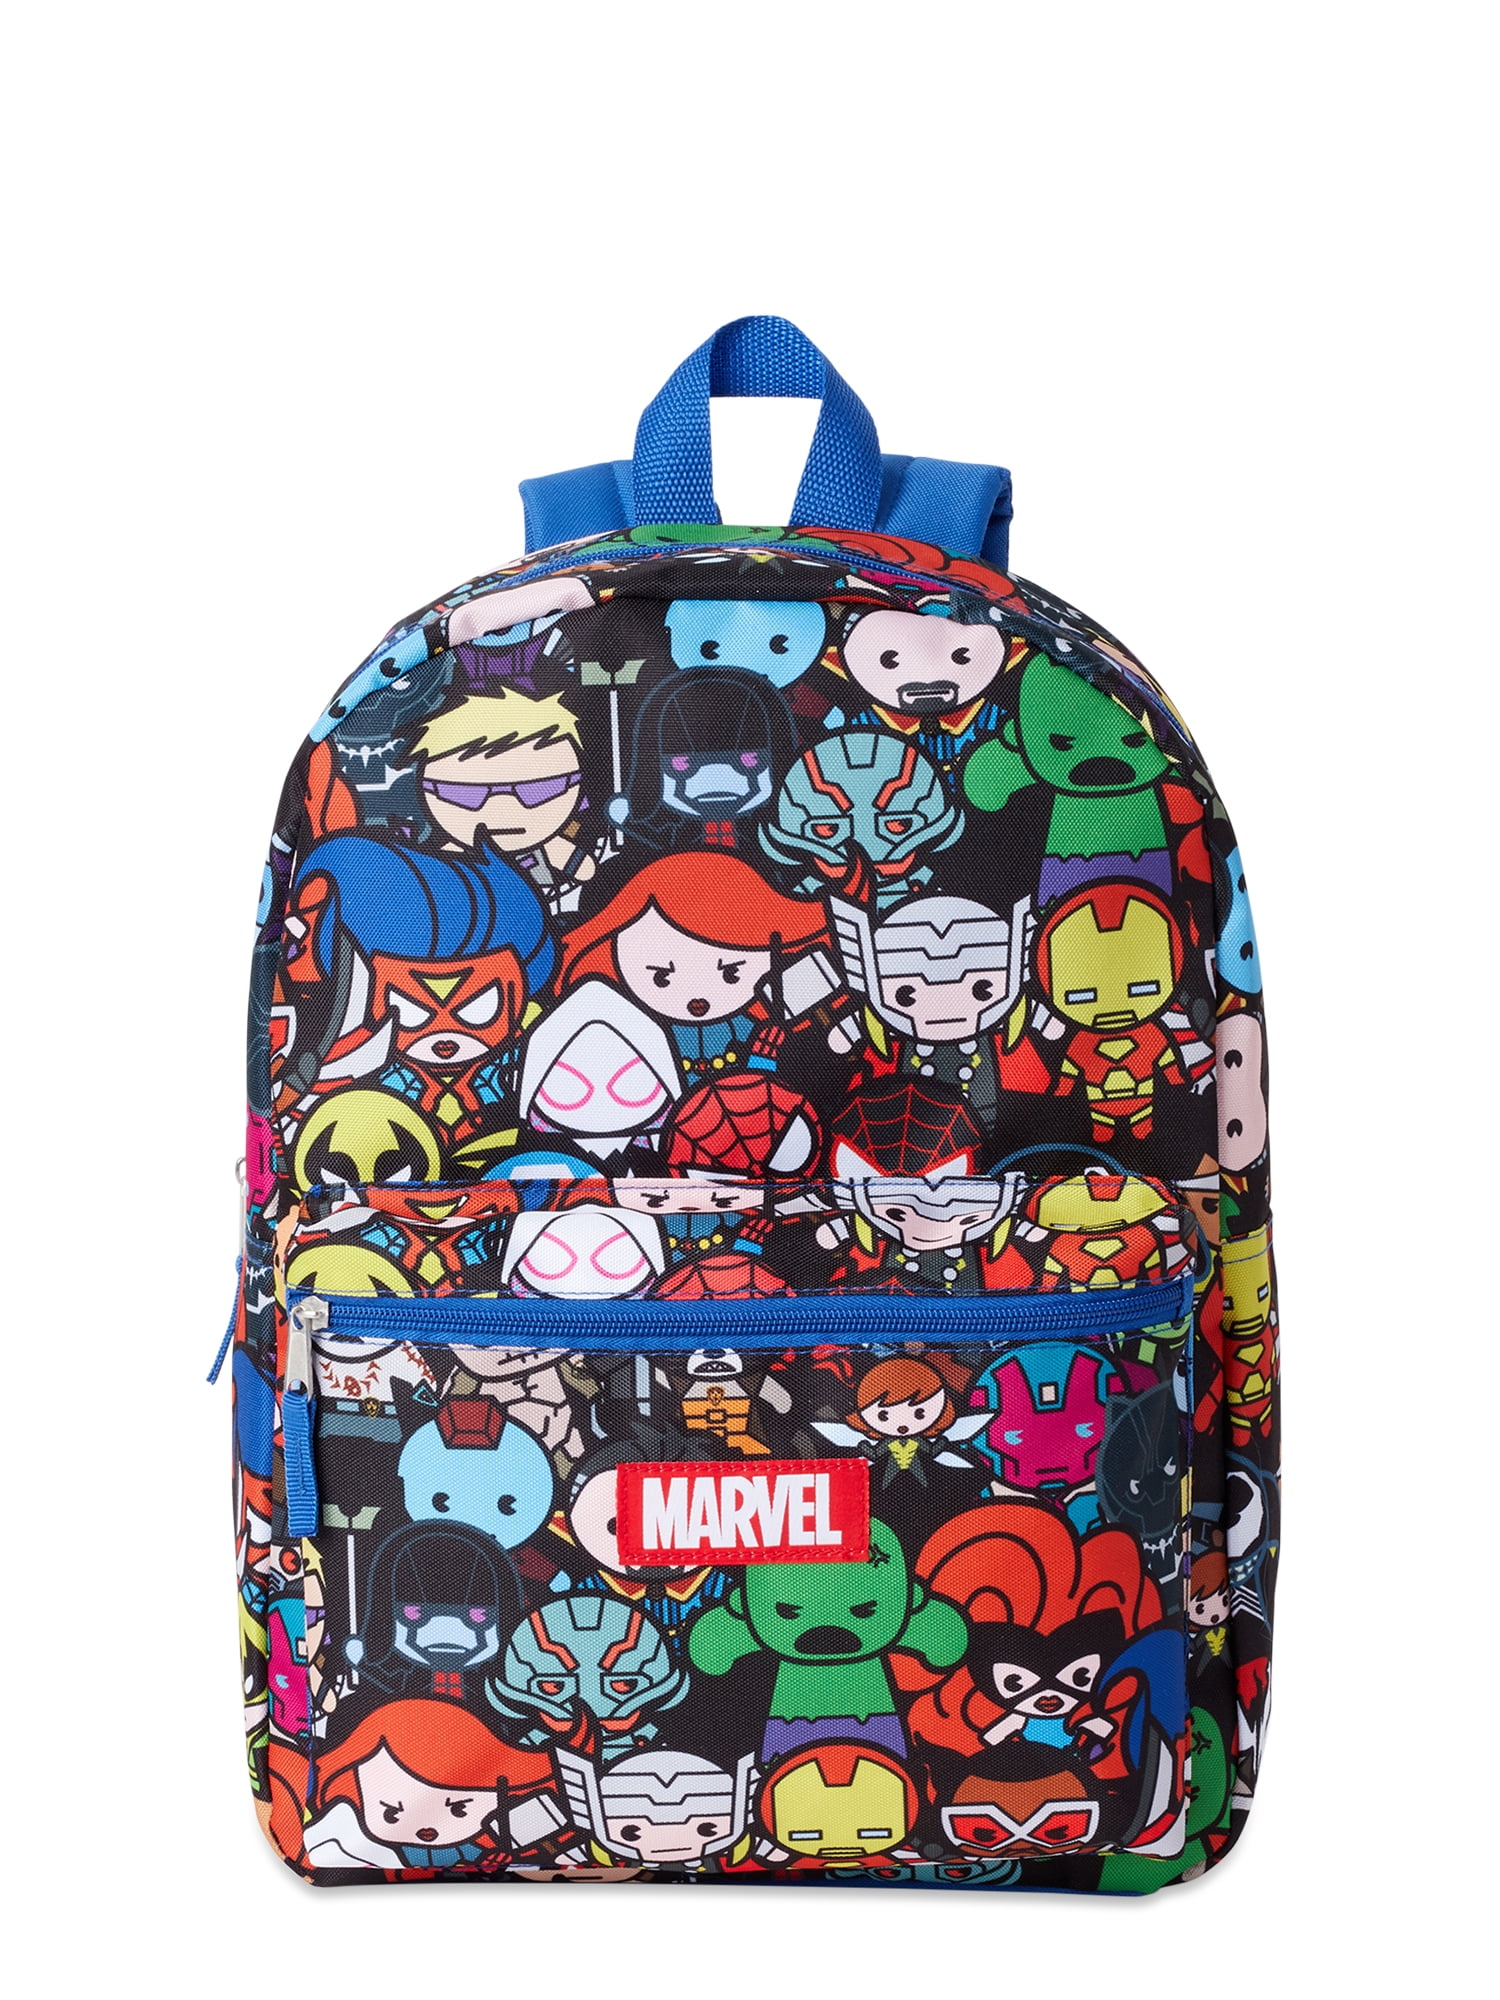 The Avengers Marvel Avengers Kawaii Backpack Walmart